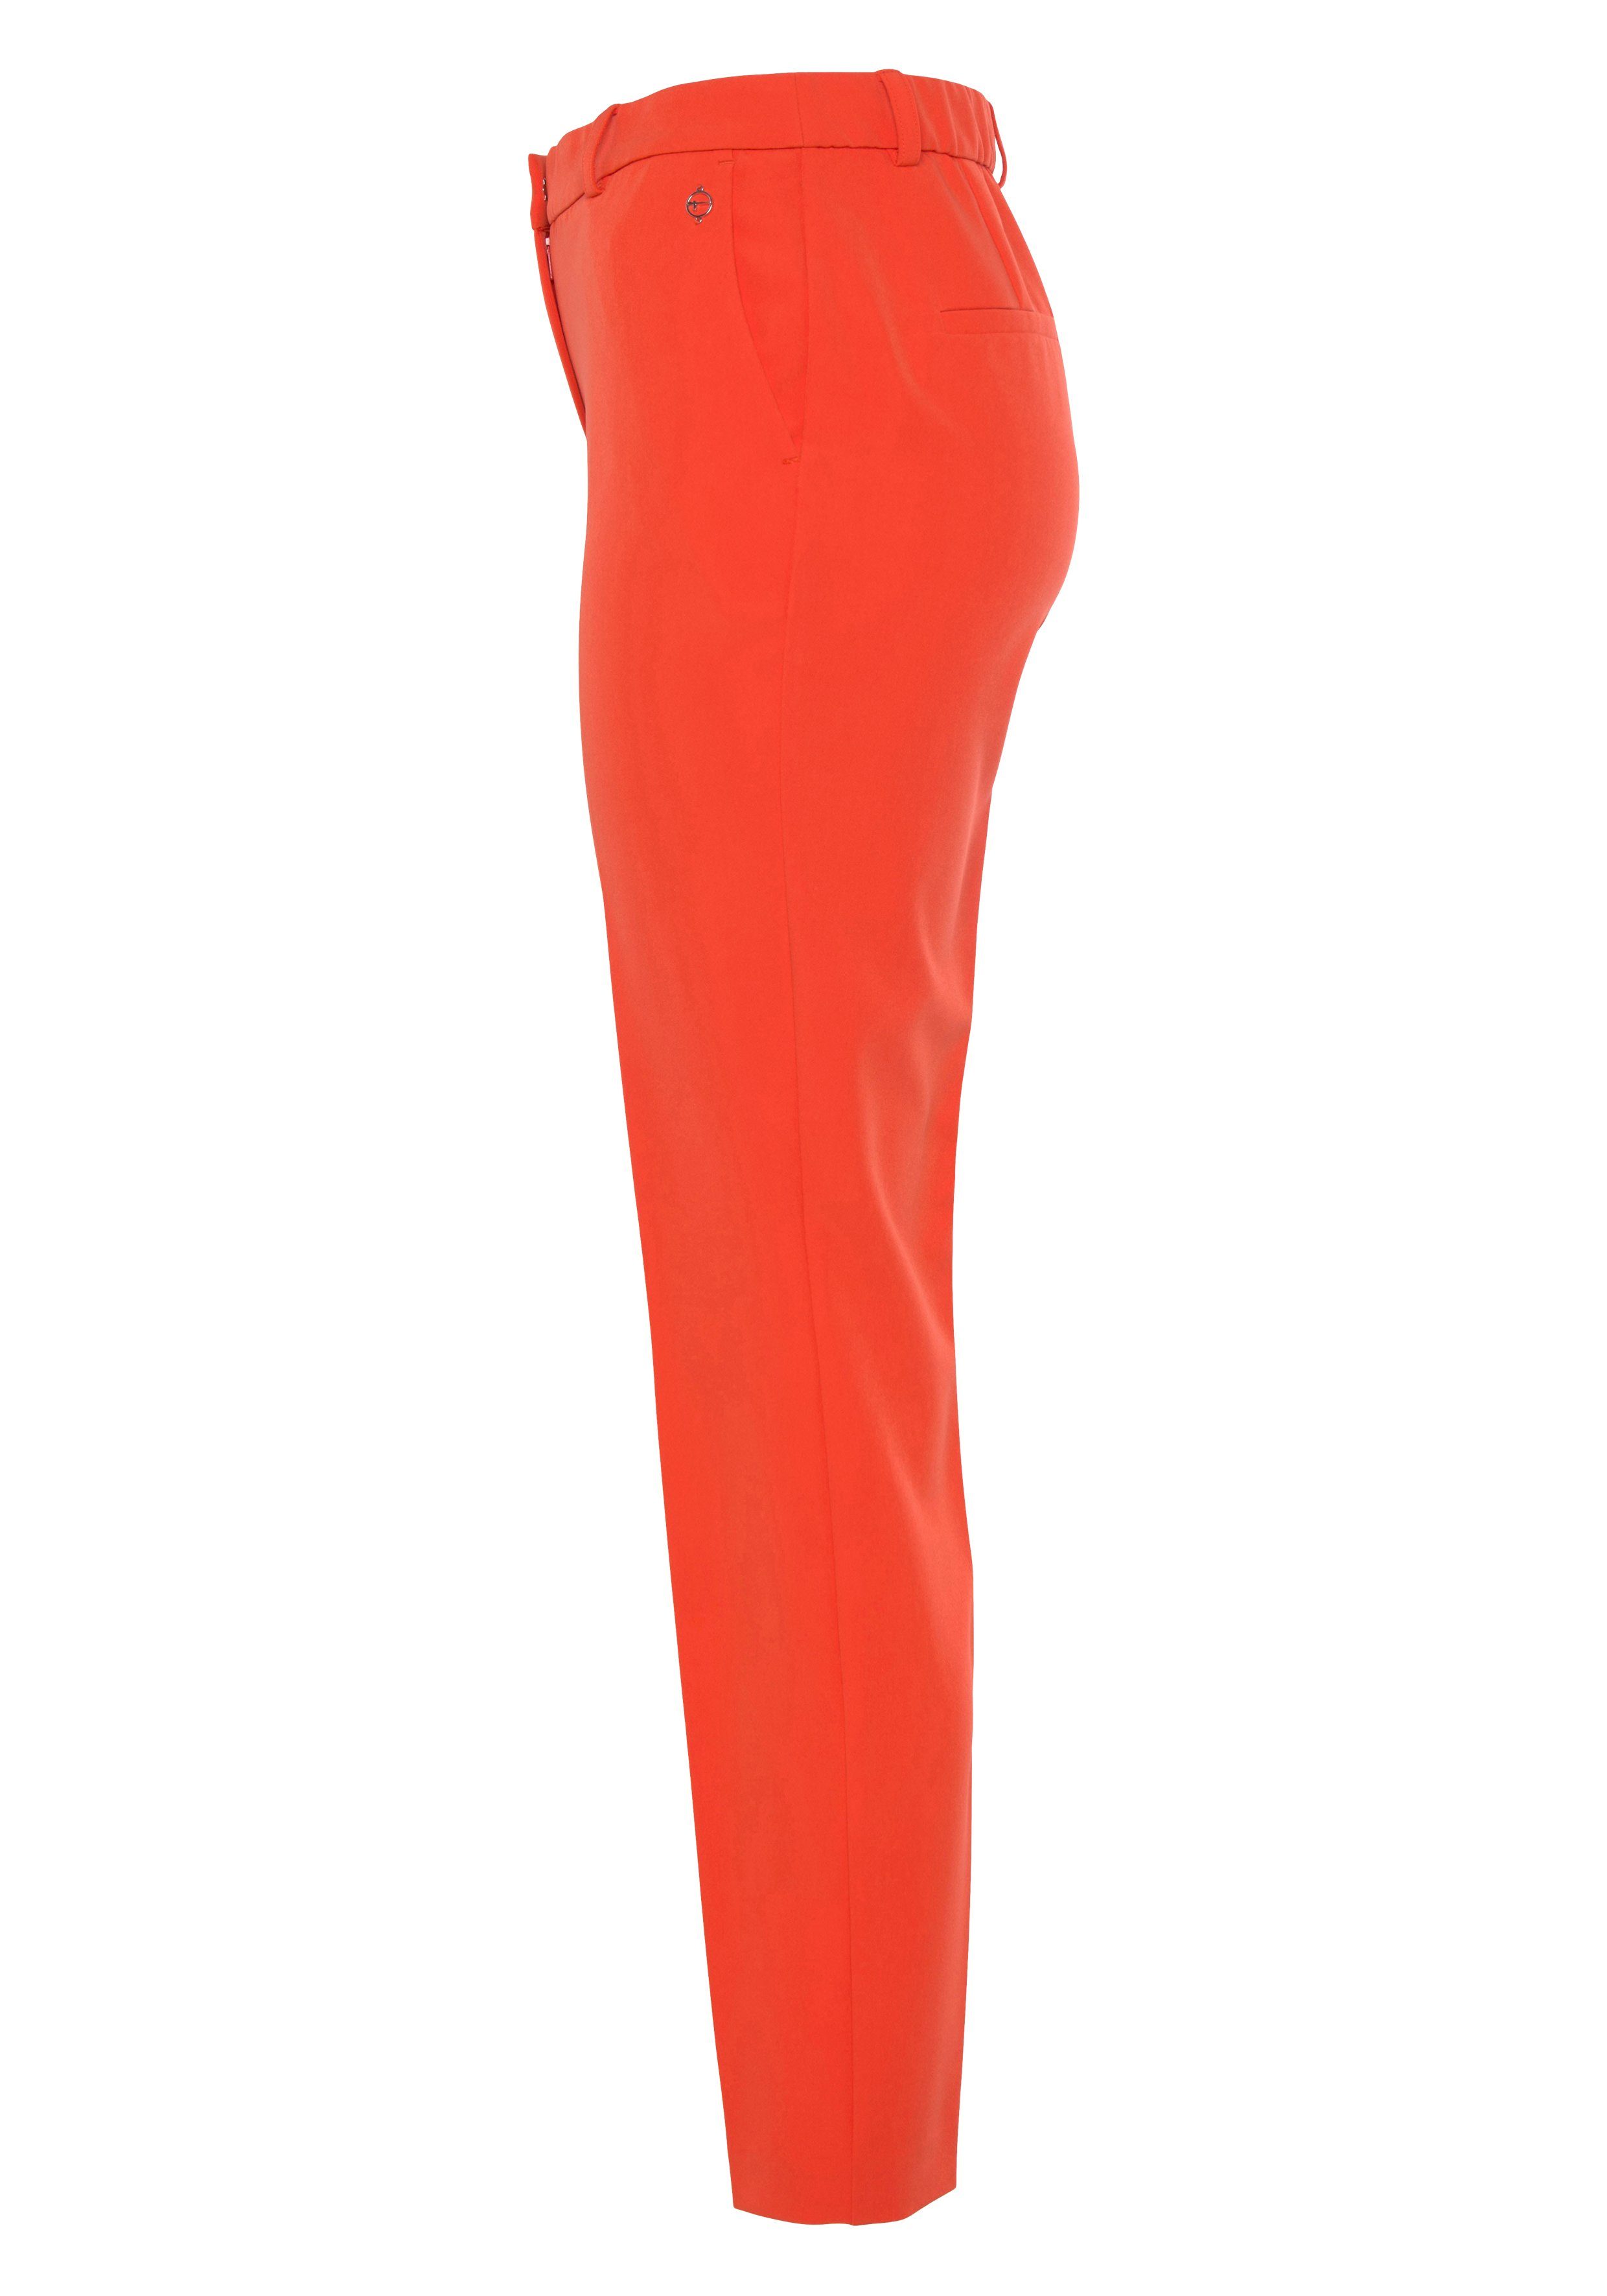 Tamaris Anzughose in Trendfarben orange nachhaltigem (Hose Material) aus